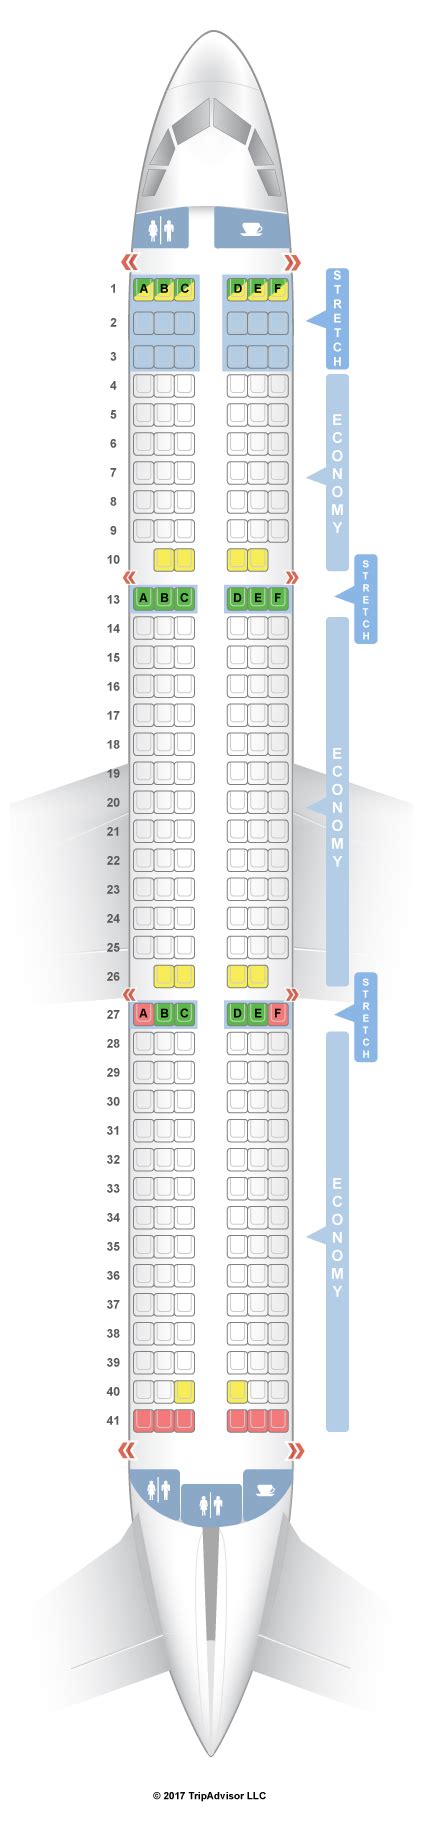 Diskon 28 Seat Map Citilink A320